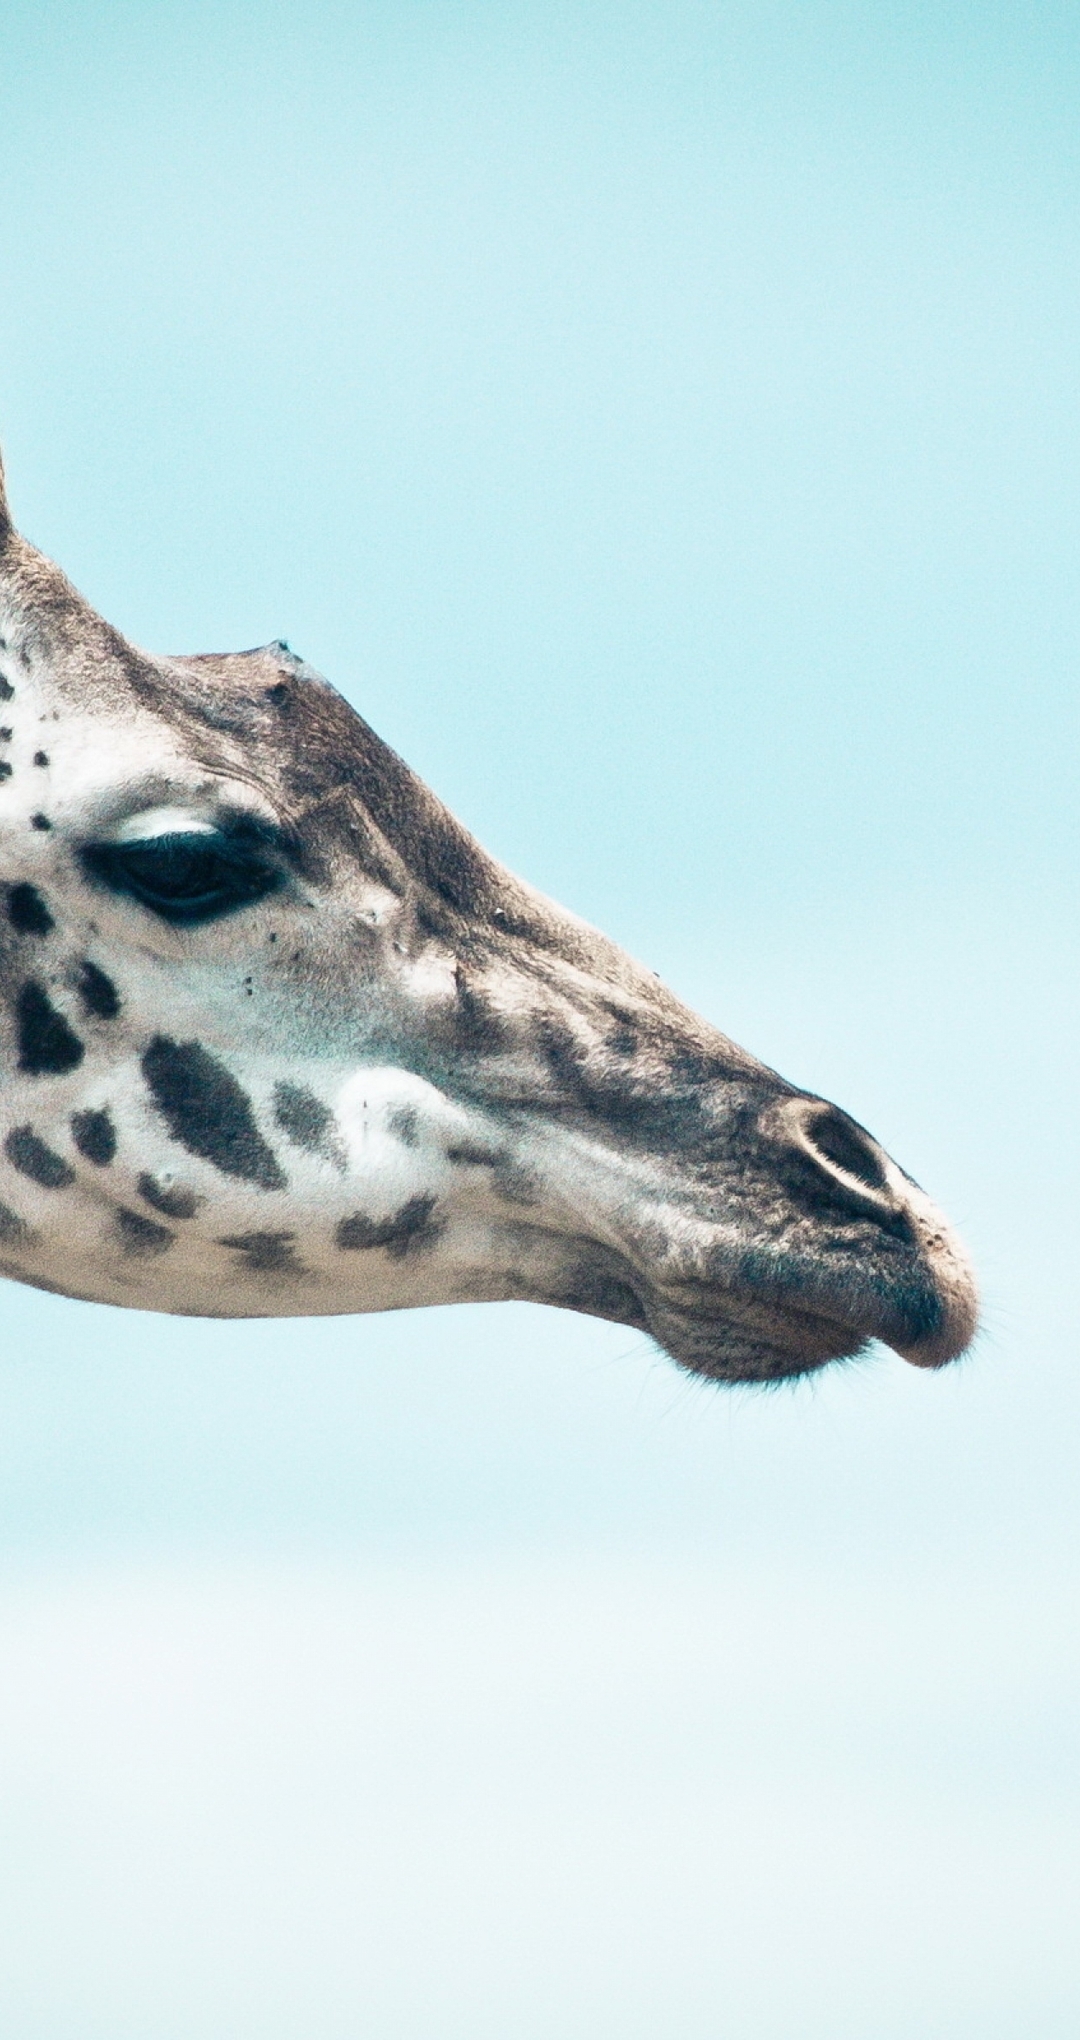 Картинка: Жираф, голова, шея, пятна, глаза, профиль, небо